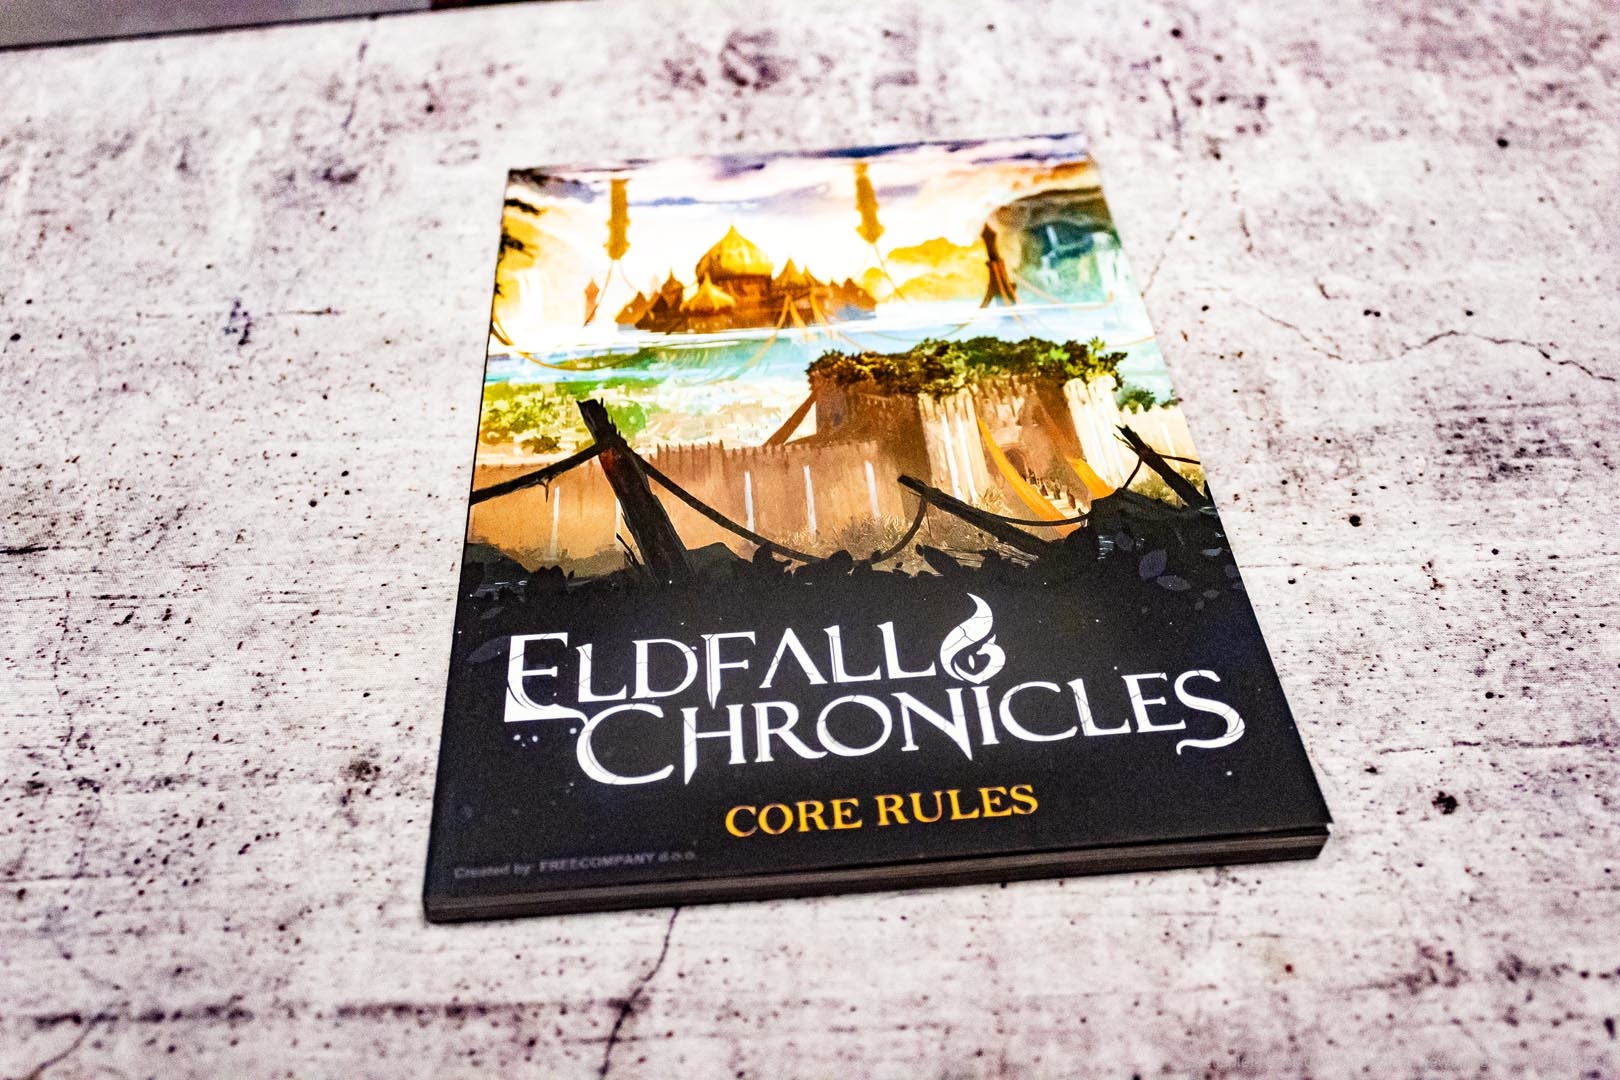 eldfalls chronicles 001